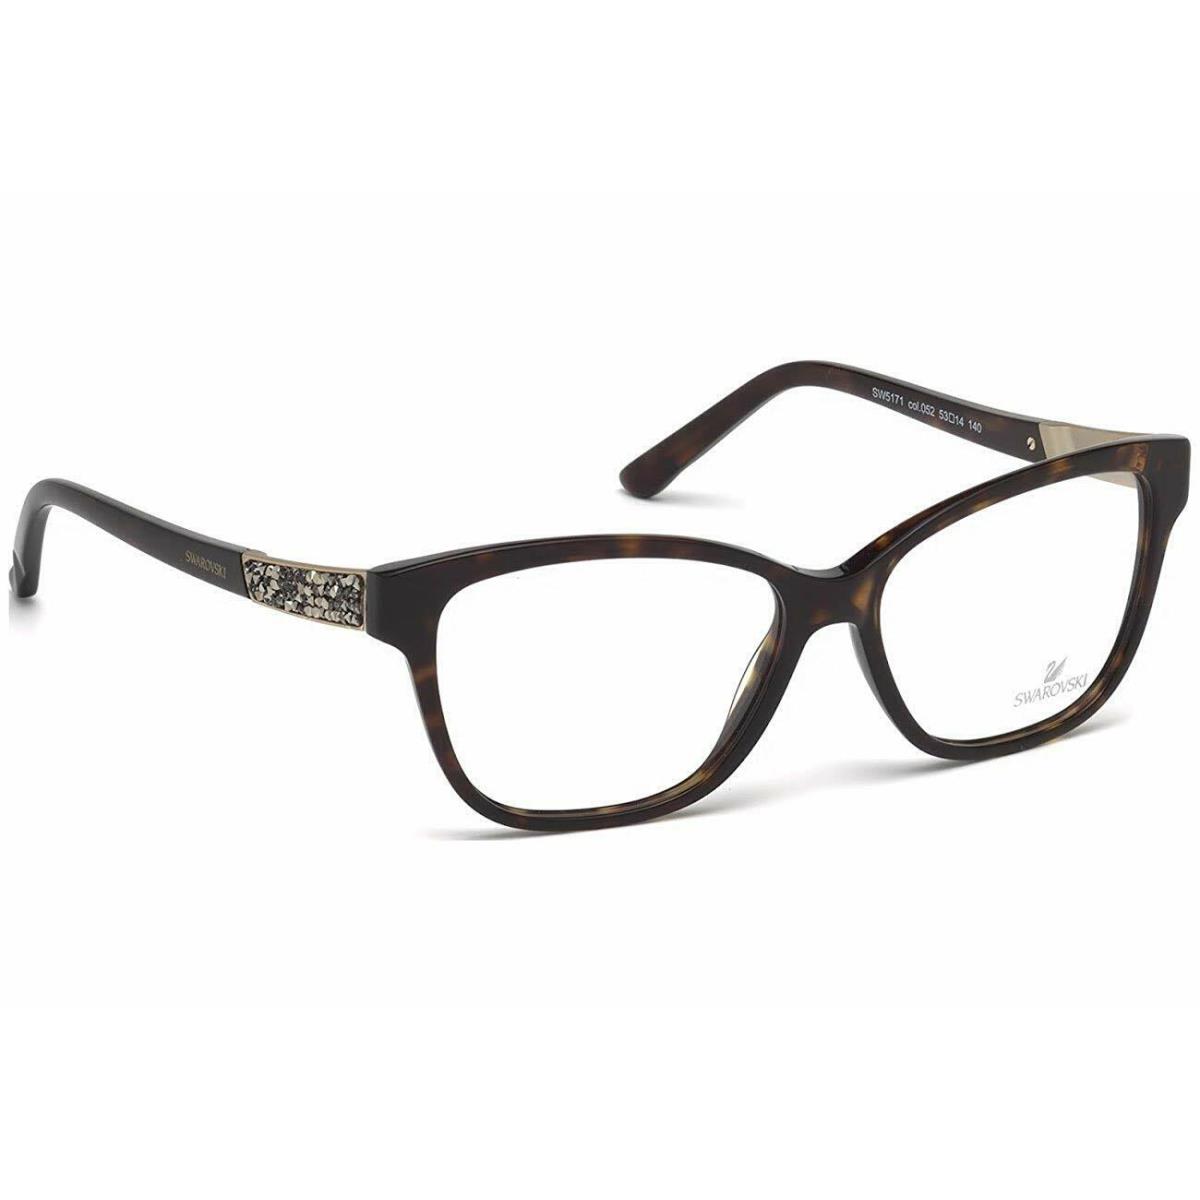 Swarovski SW 5171-F 052 Tortoise Plastic Eyeglasses Asian Fit 51-14-140 SW5171F